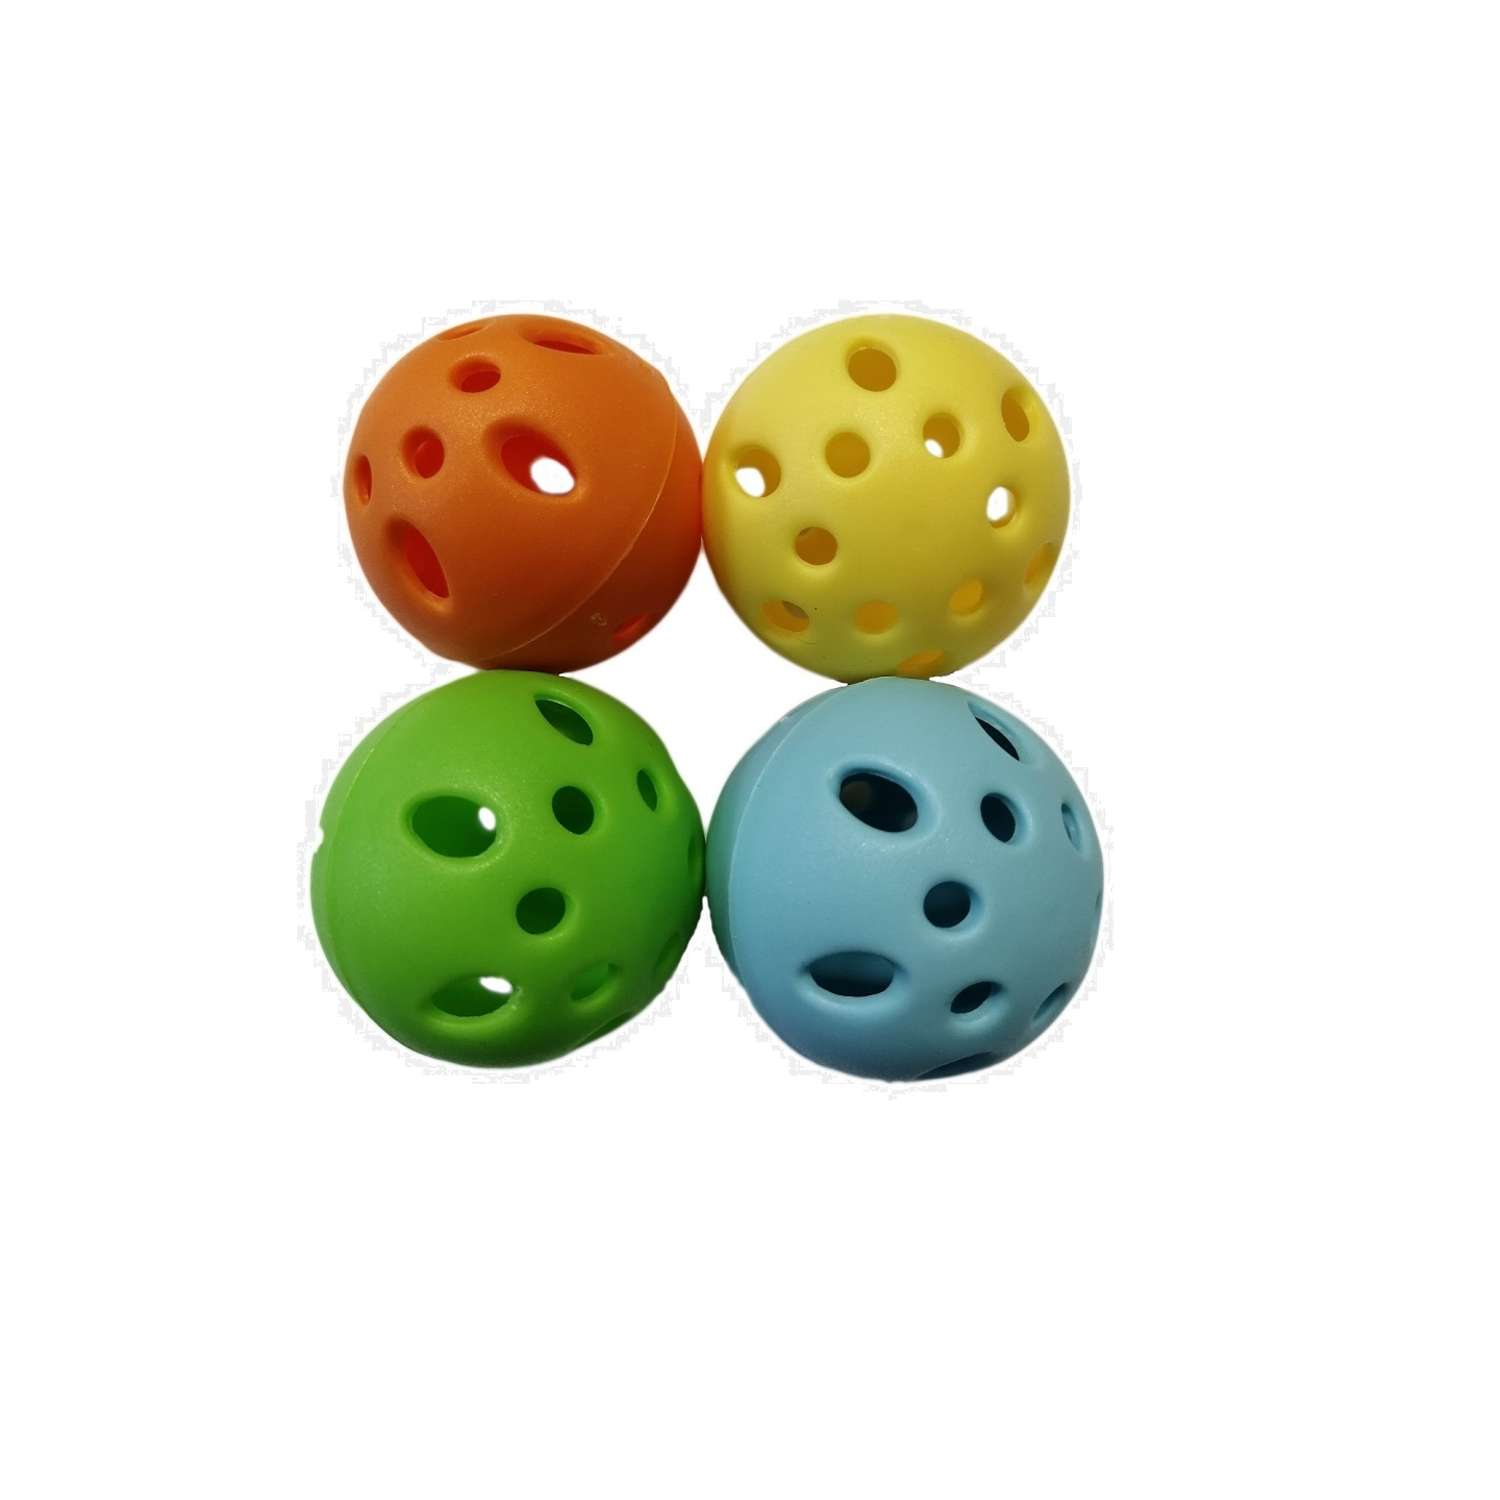 Набор мячиков для кошек 4 шт Lilli Pet Little ball игрушки-мячики для кошек 4 шт без колокольчиков - фото 1